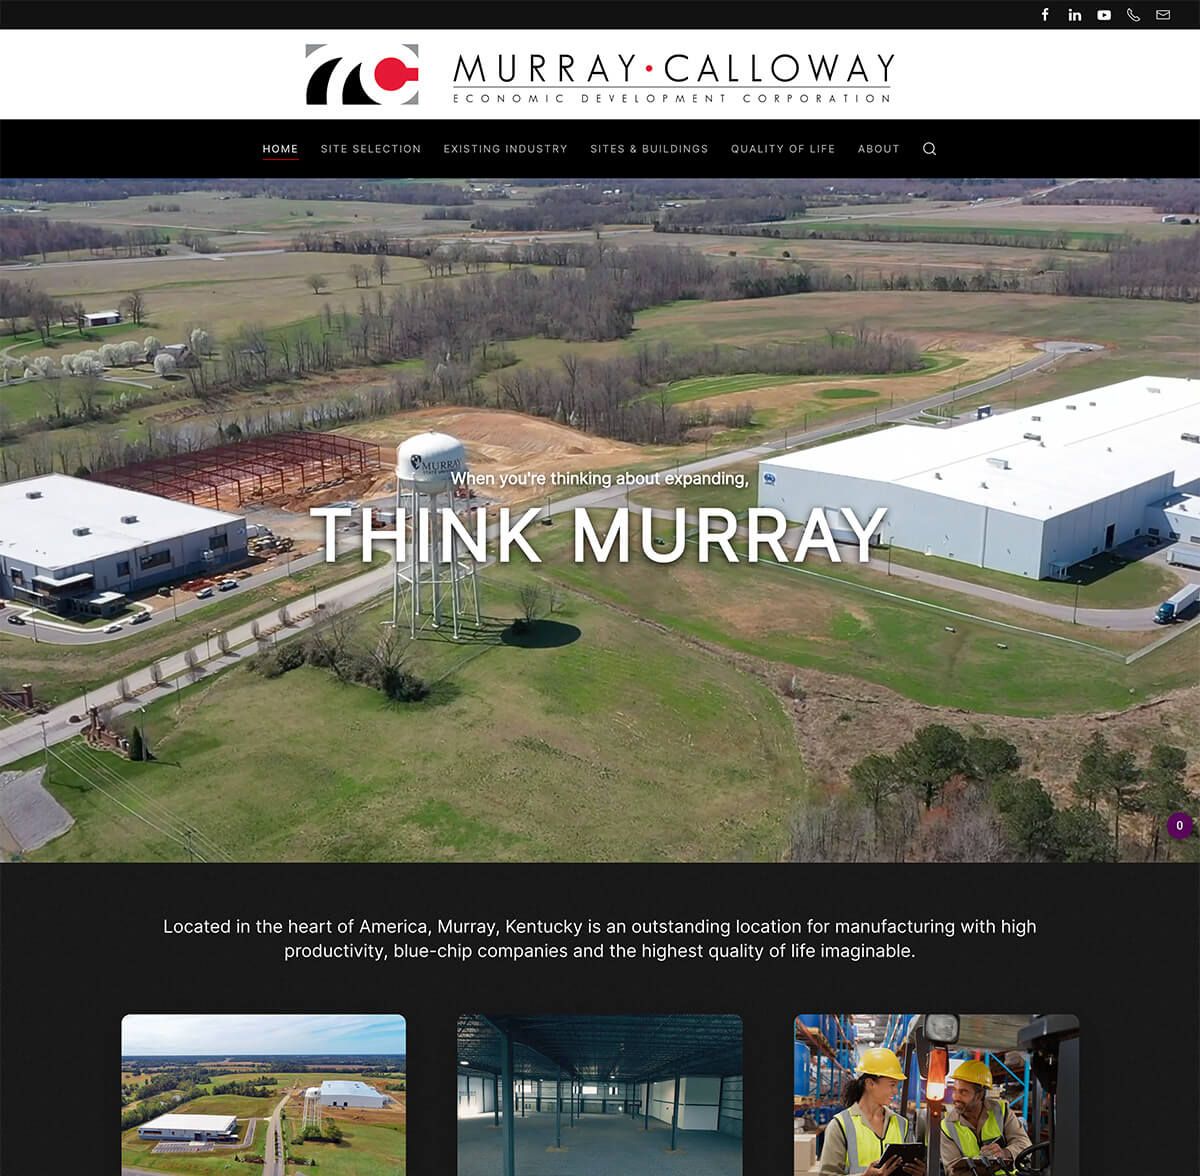 Murray Calloway Economic Development Corporation web design